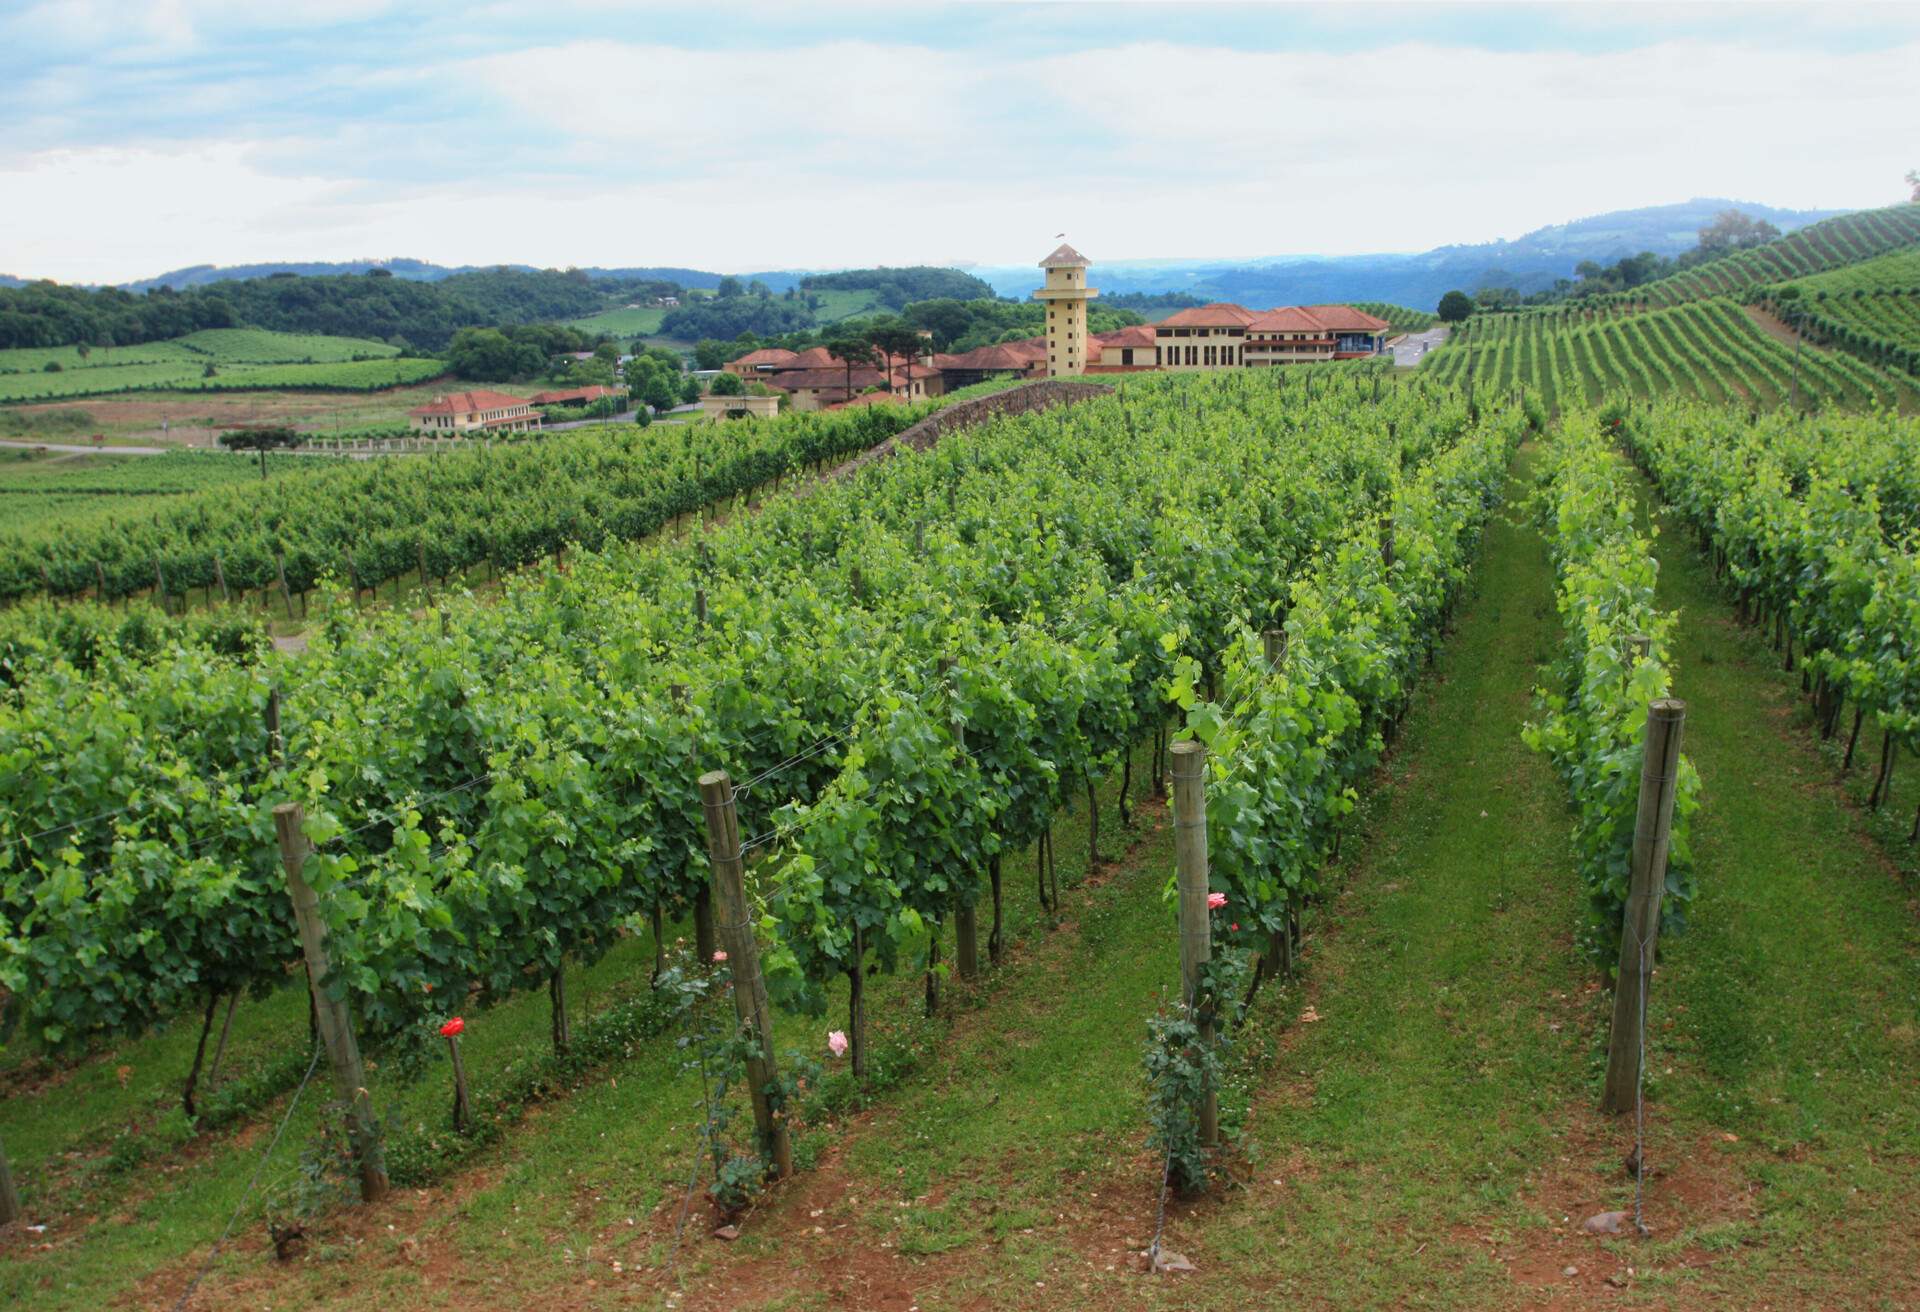 The Valley of the Vineyards in Bento Gonçalves. Typical landscape from Vale dos Vinhedos region, southern Brazil. Vineyard - Parreiral